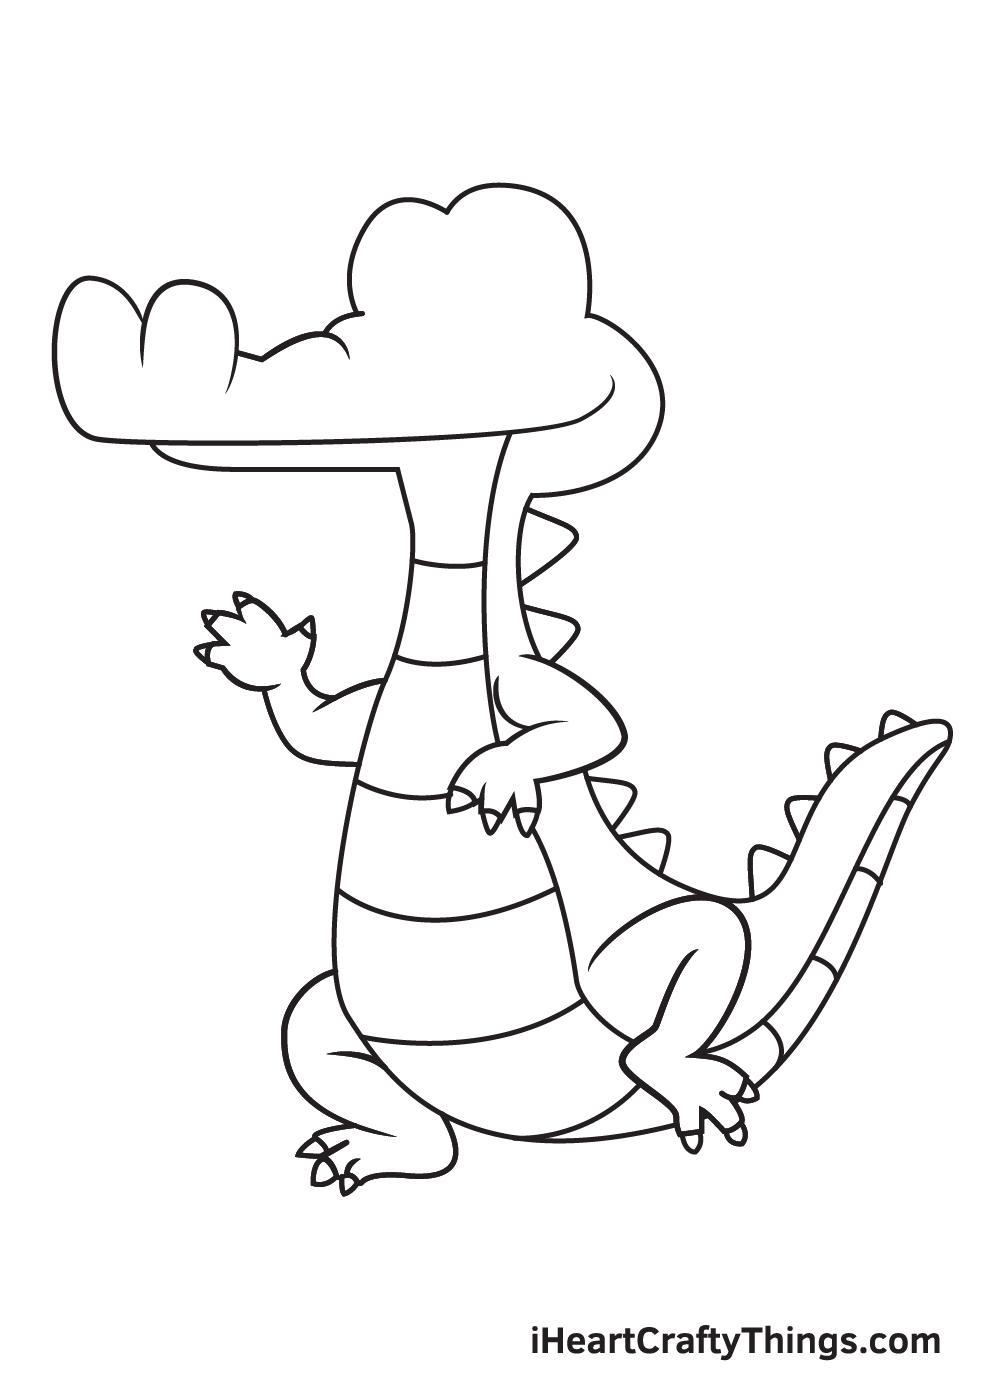 Alligator Drawing – Step 8